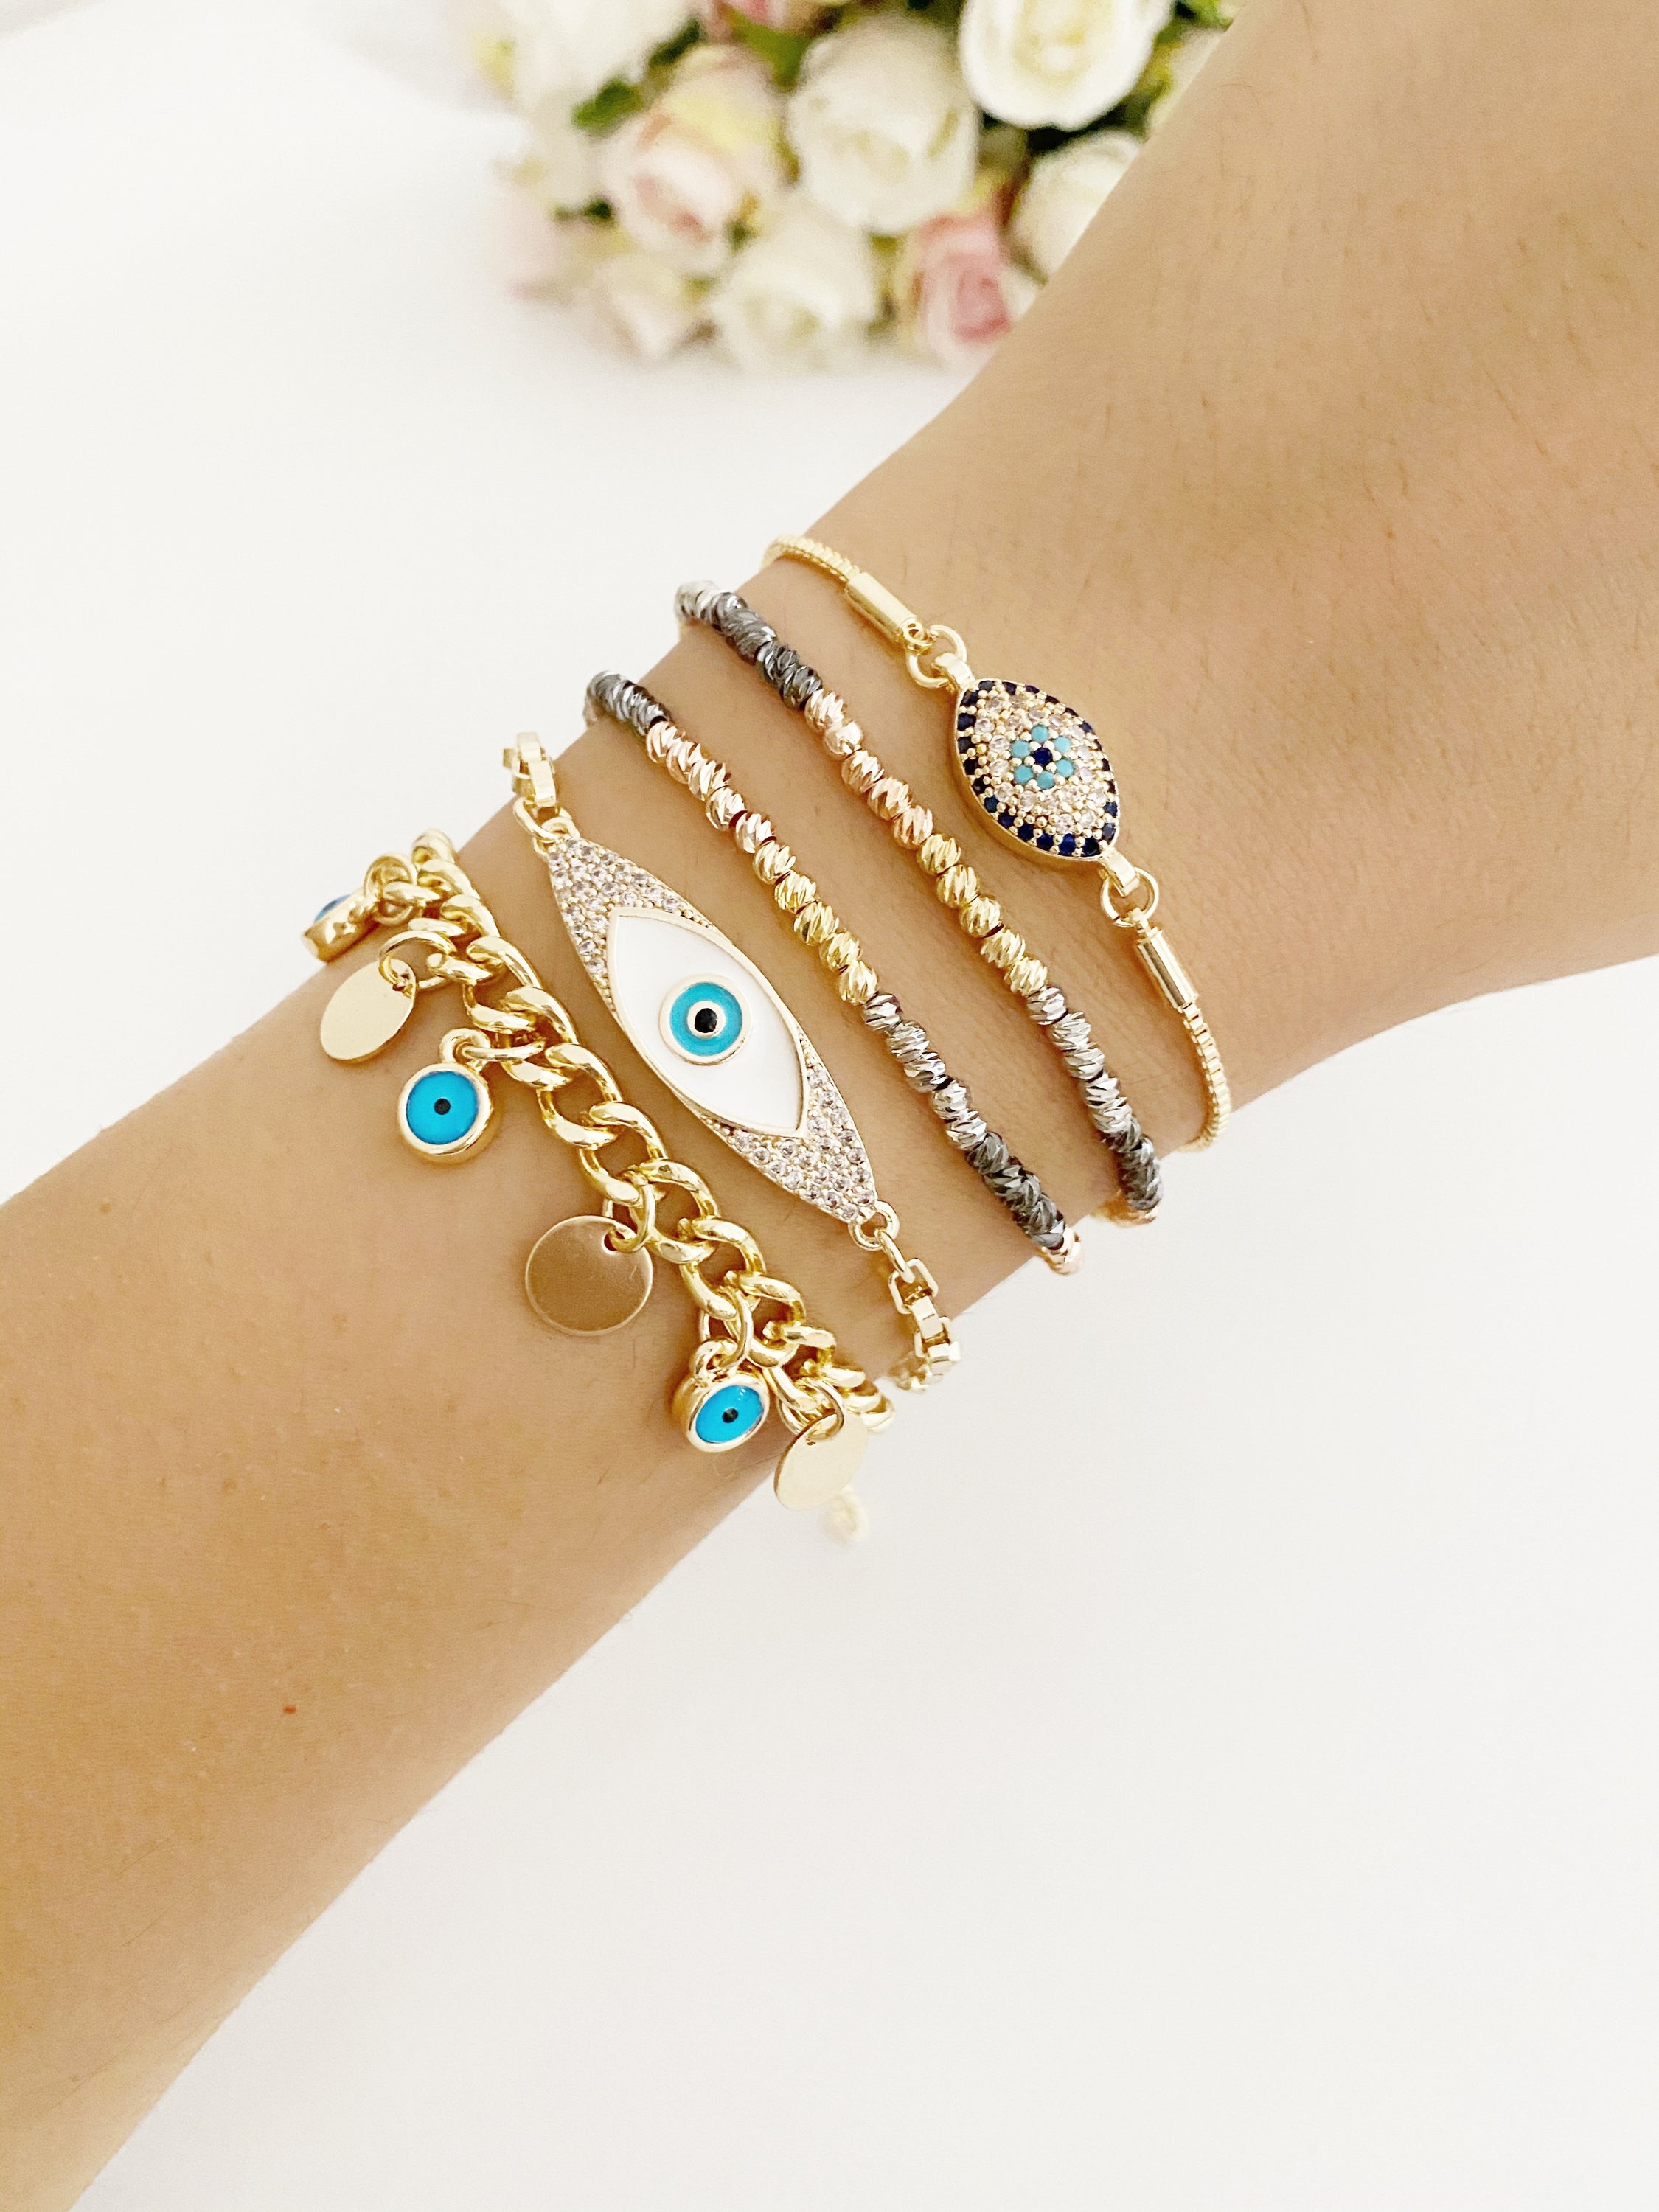 Adjustable Evil Eye Chain Bracelet Set - Gold Greek Jewelry for Protection Bijou Her